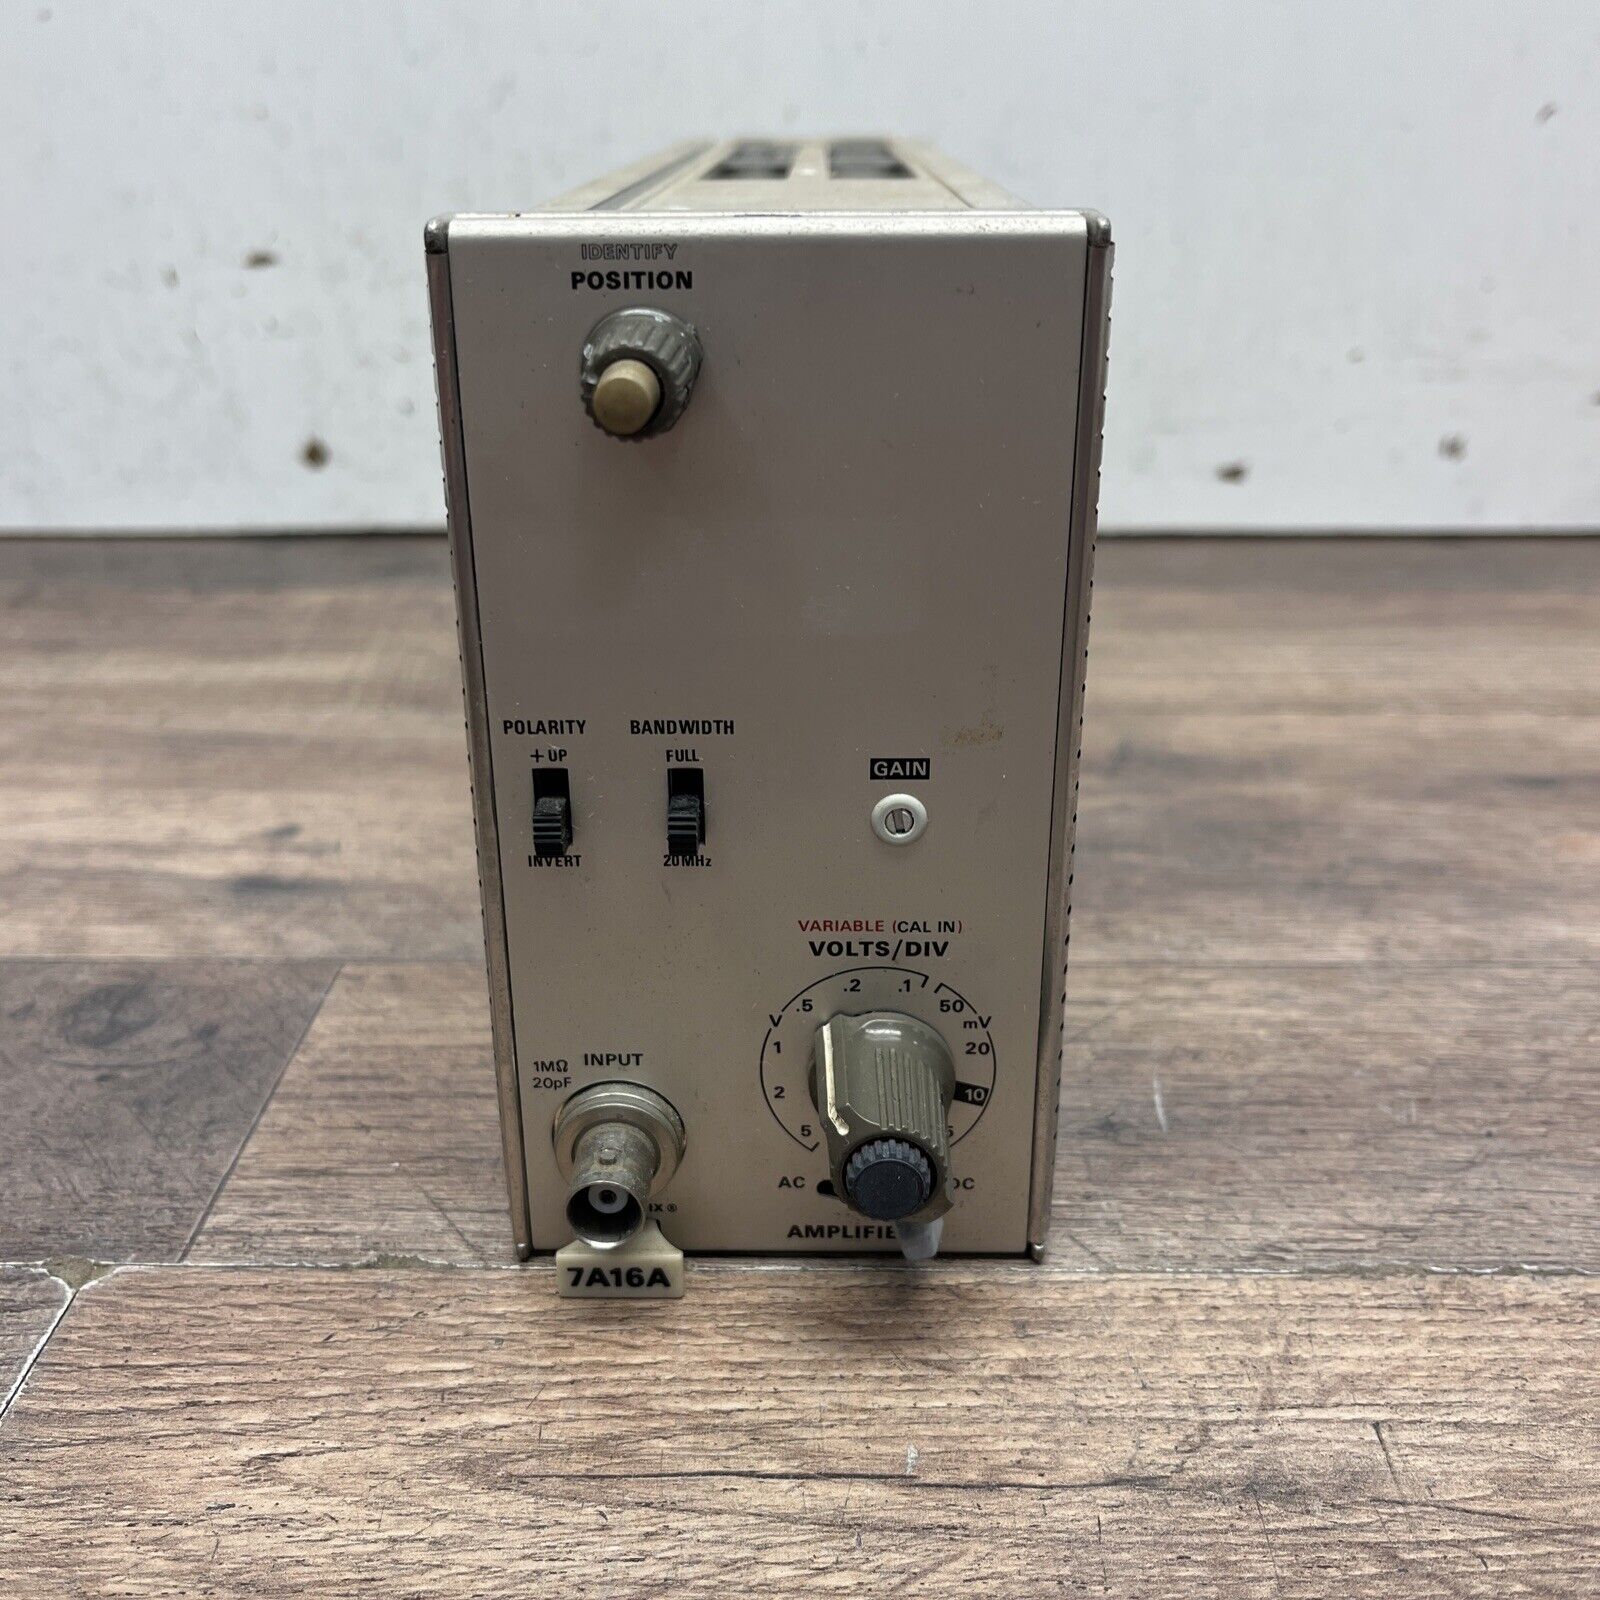 Tektronix 7A16A Amplifier Plug-In